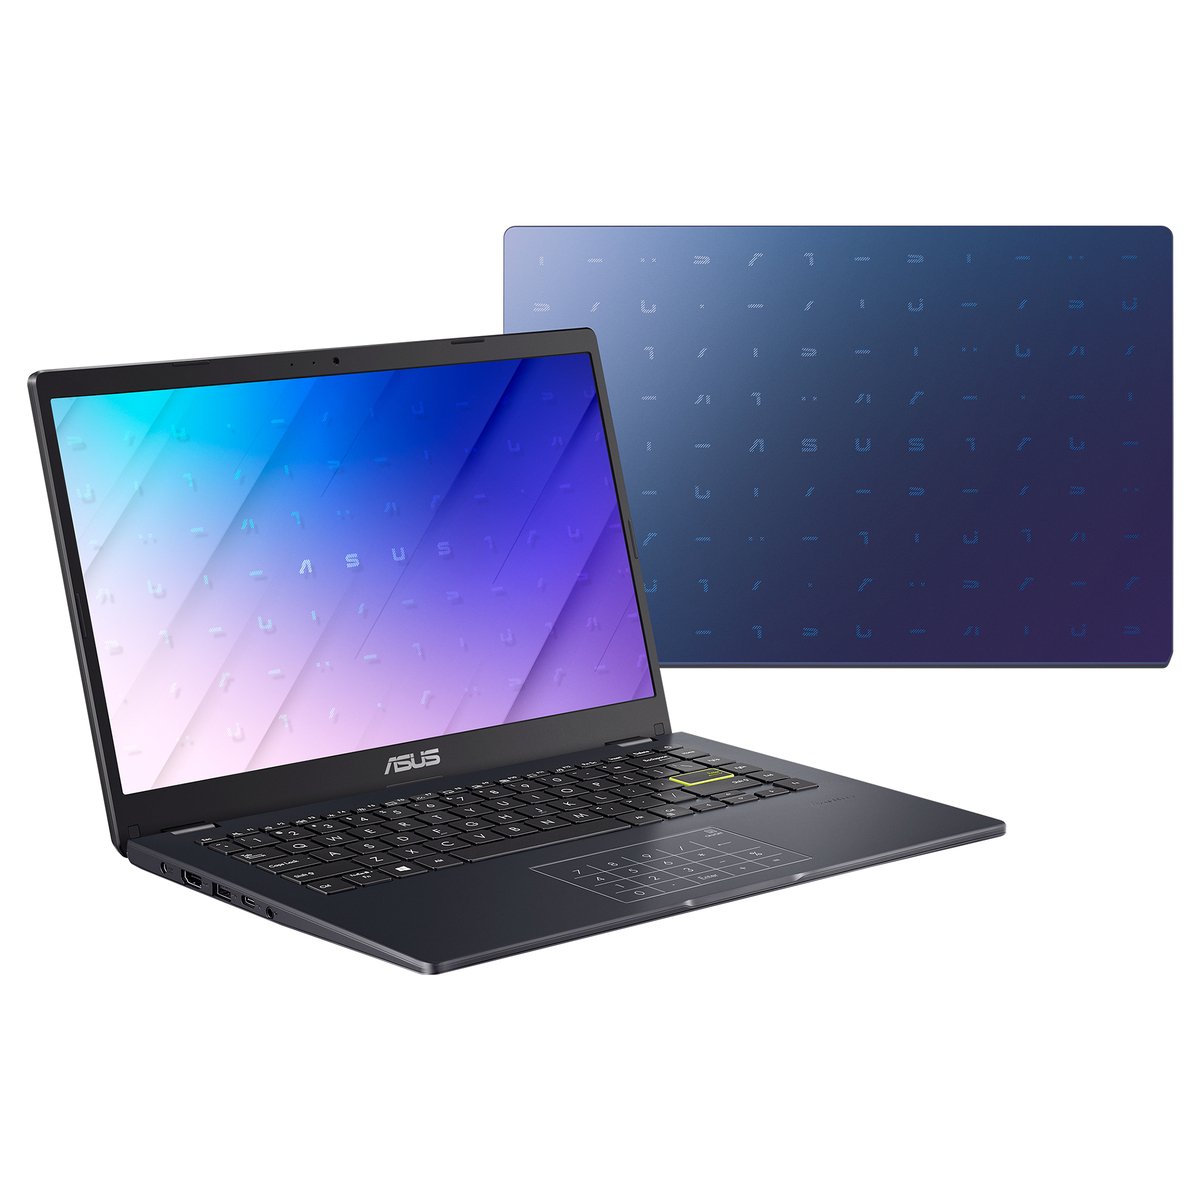 Asus Laptop E410ma Ek005t Laptop Intel Celeron N4020 4gb Ram 128gbstorage Intel Uhd 6782